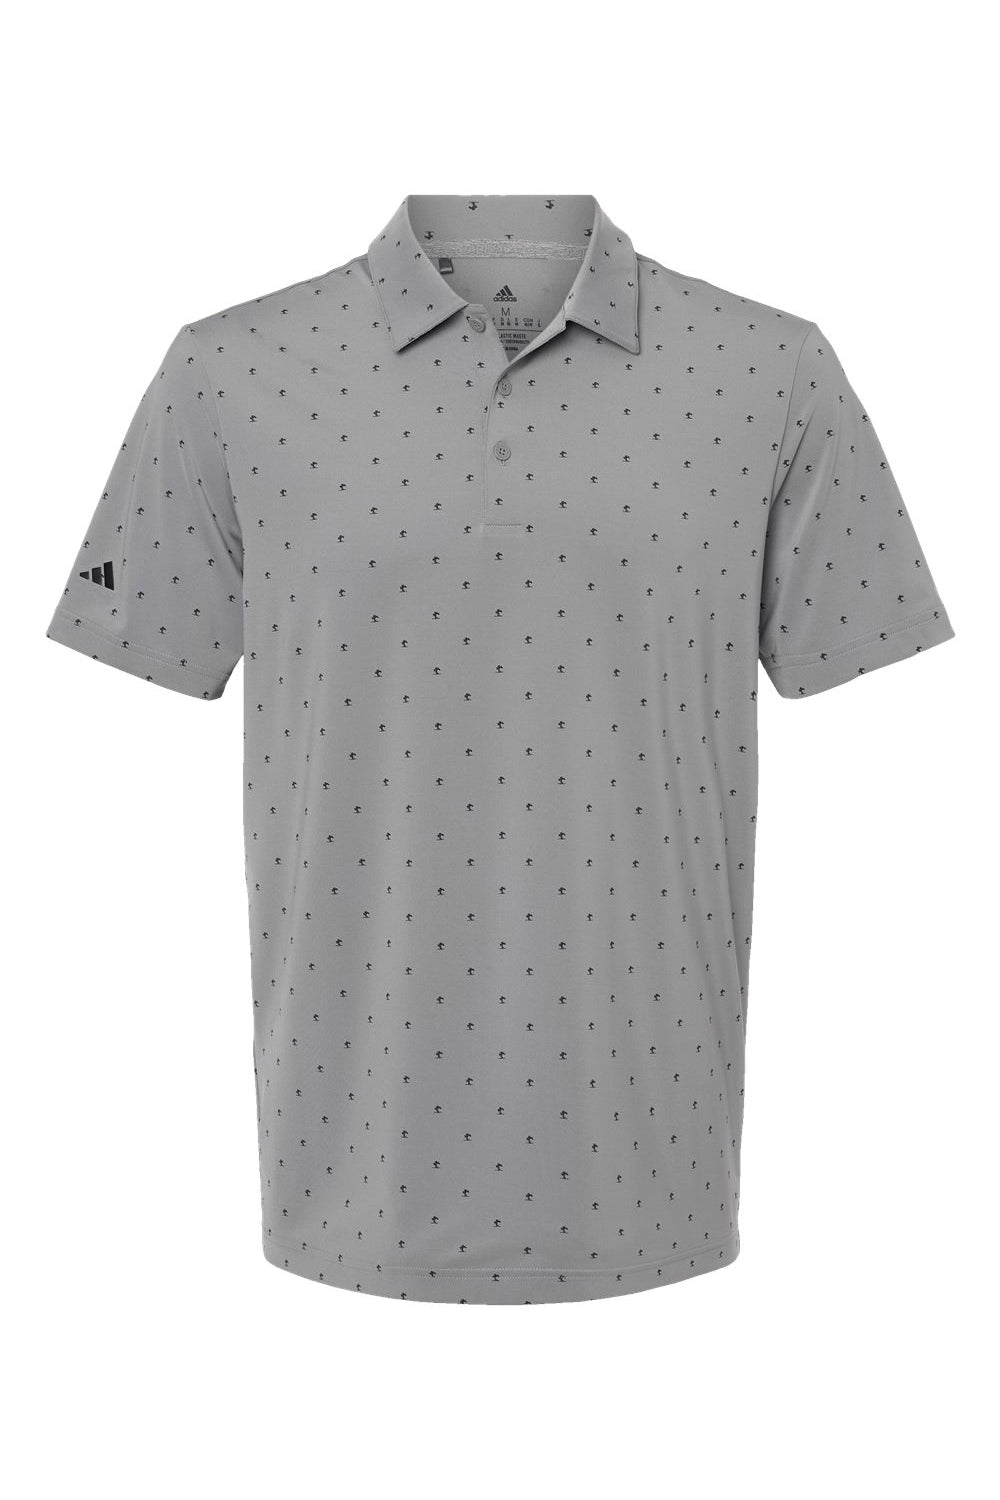 Adidas A574 Mens Pine Tree Moisture Wicking Short Sleeve Polo Shirt Grey/Black Flat Front